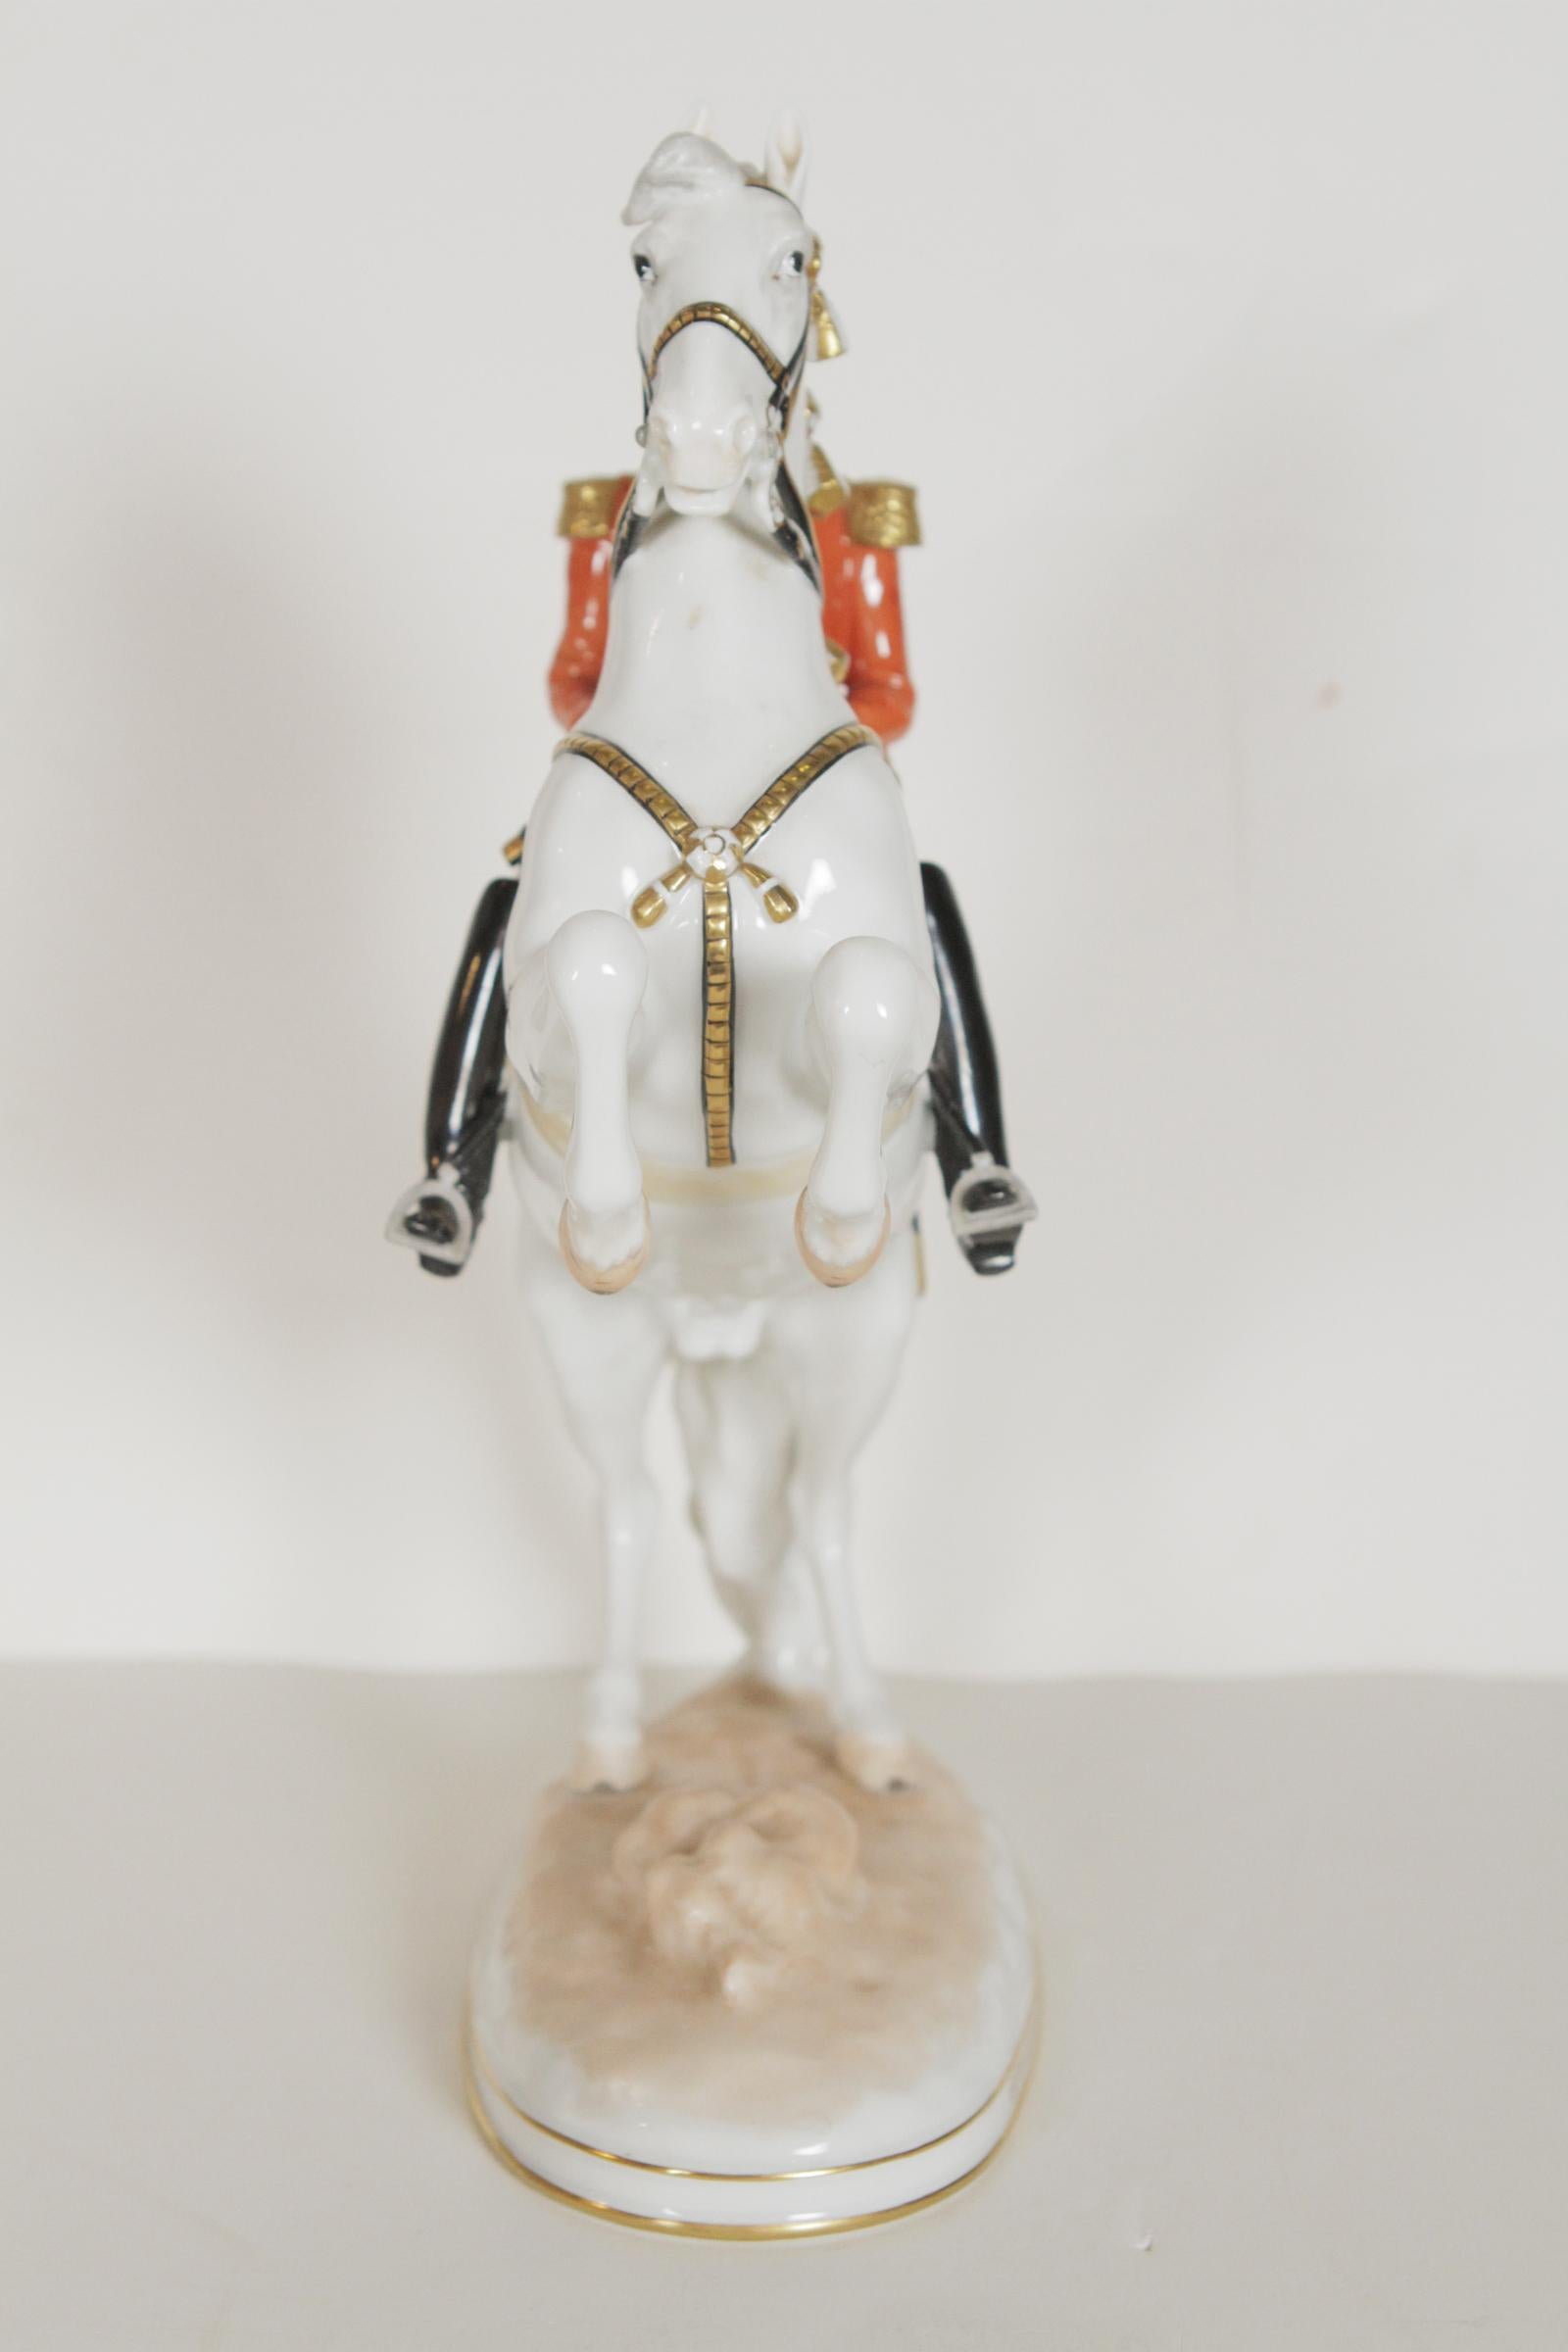 Austrian Augurten Royal Vienna Porcelain “Lipizzaner Horse Riding School Courbette” 